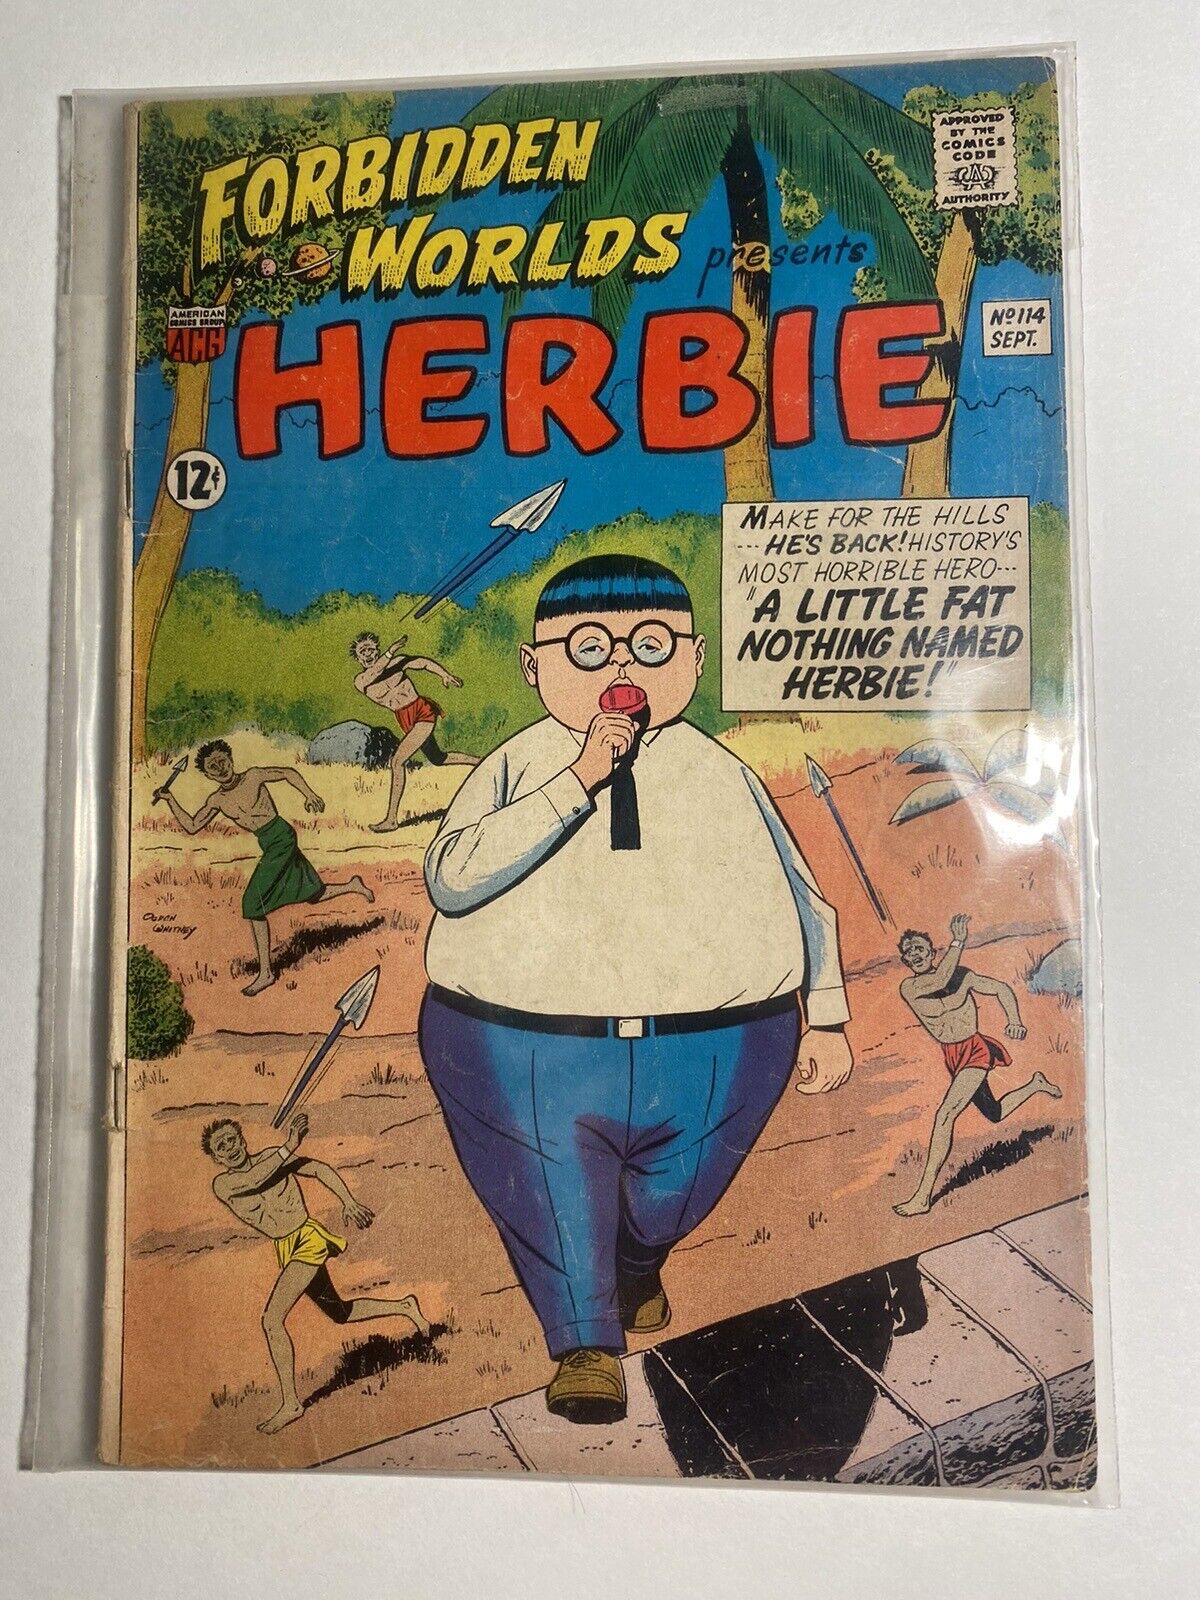 Herbie Forbidden Worlds #114 - 1963 - ACG  - Vintage comic book Rare.